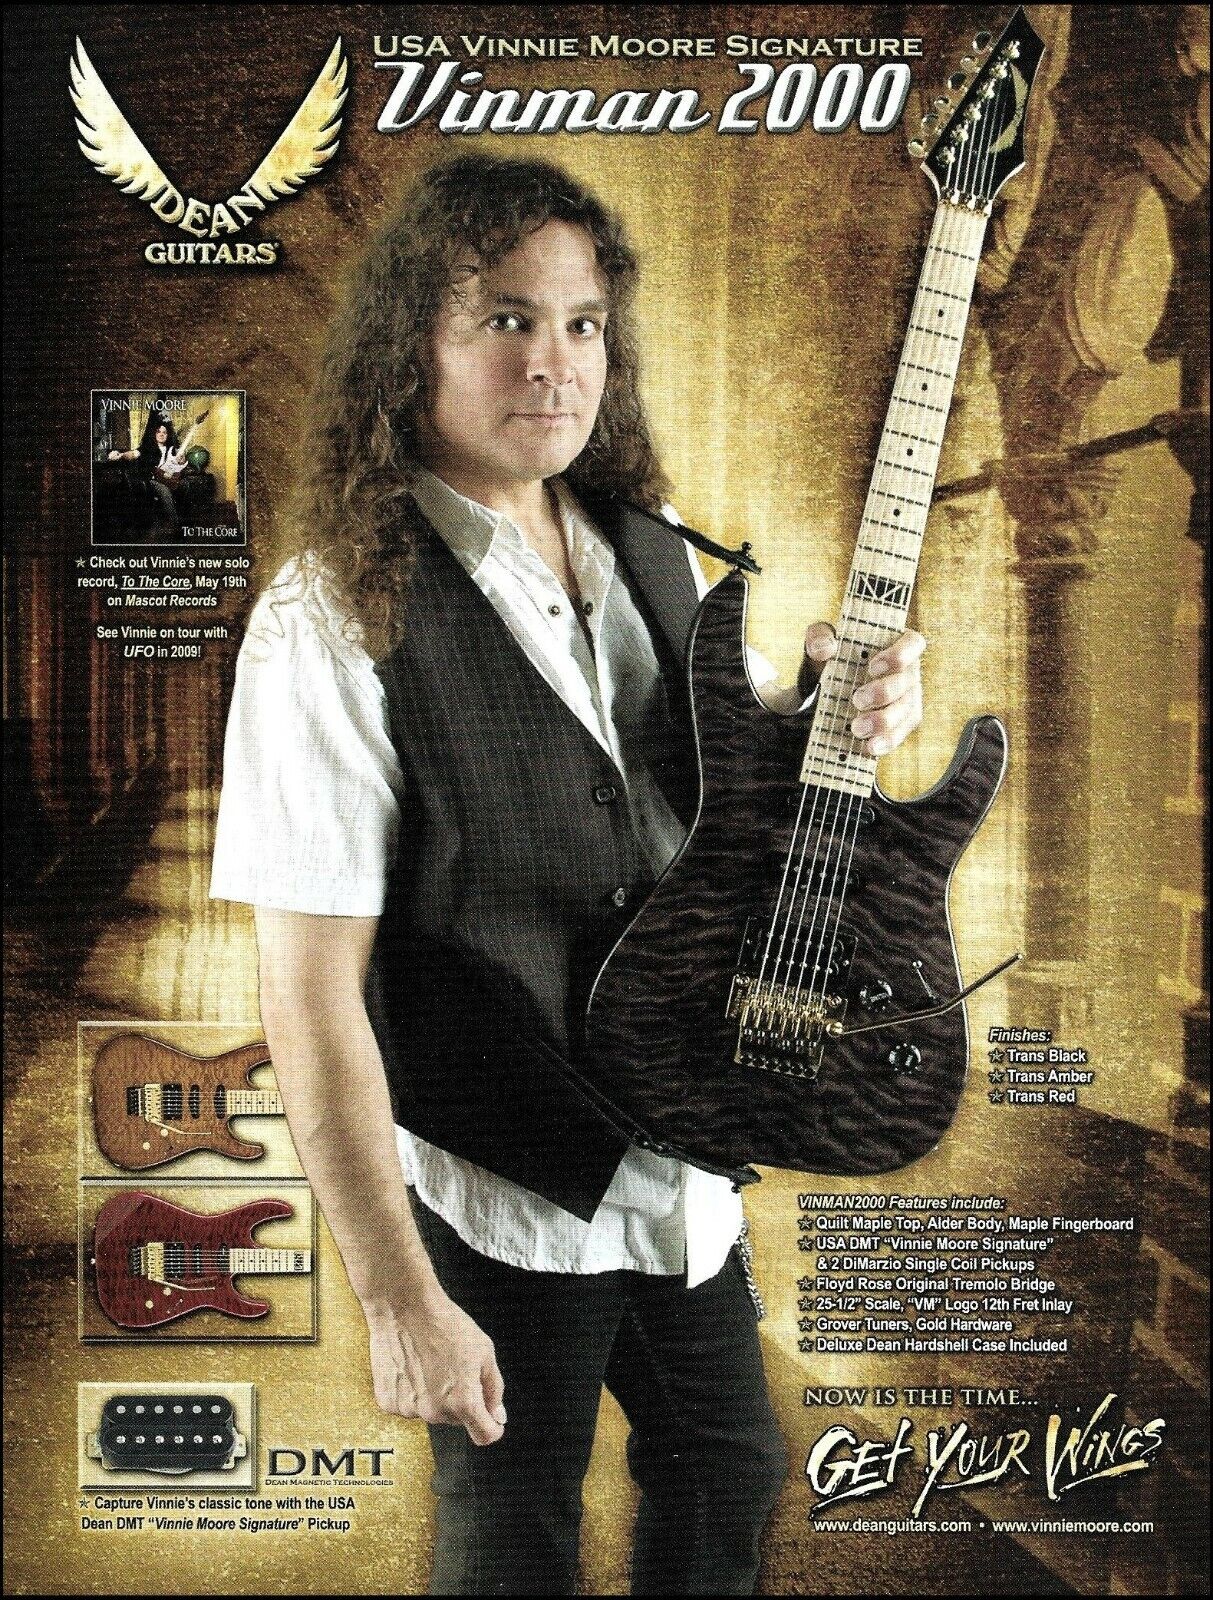 USA Vinnie Moore Signature Dean Vinman 2000 Ibanez guitar ad 2009 advertisement